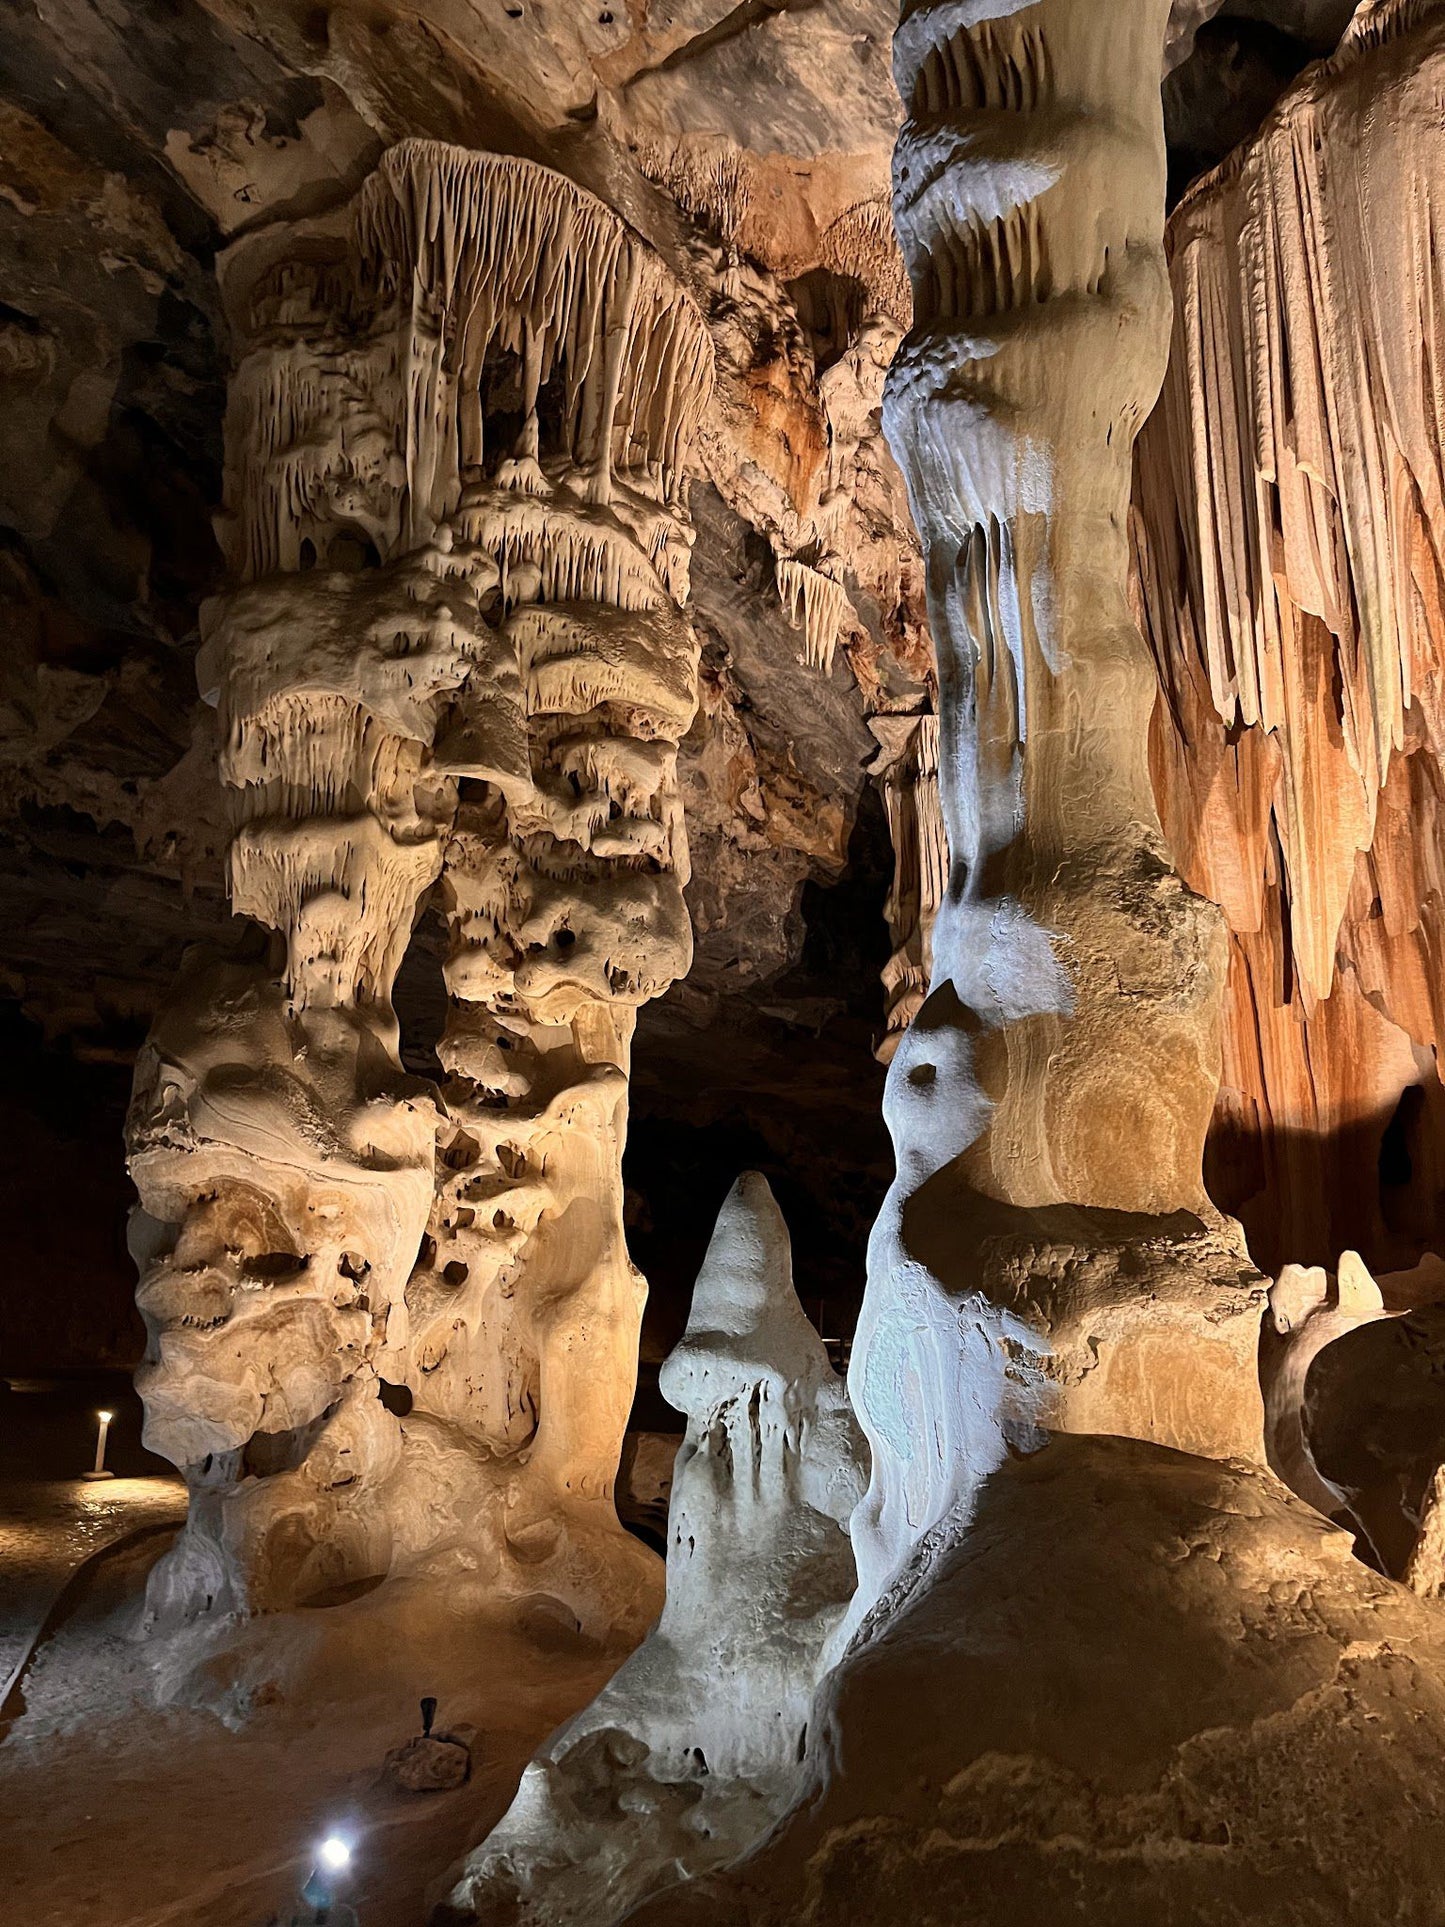  Cango Caves